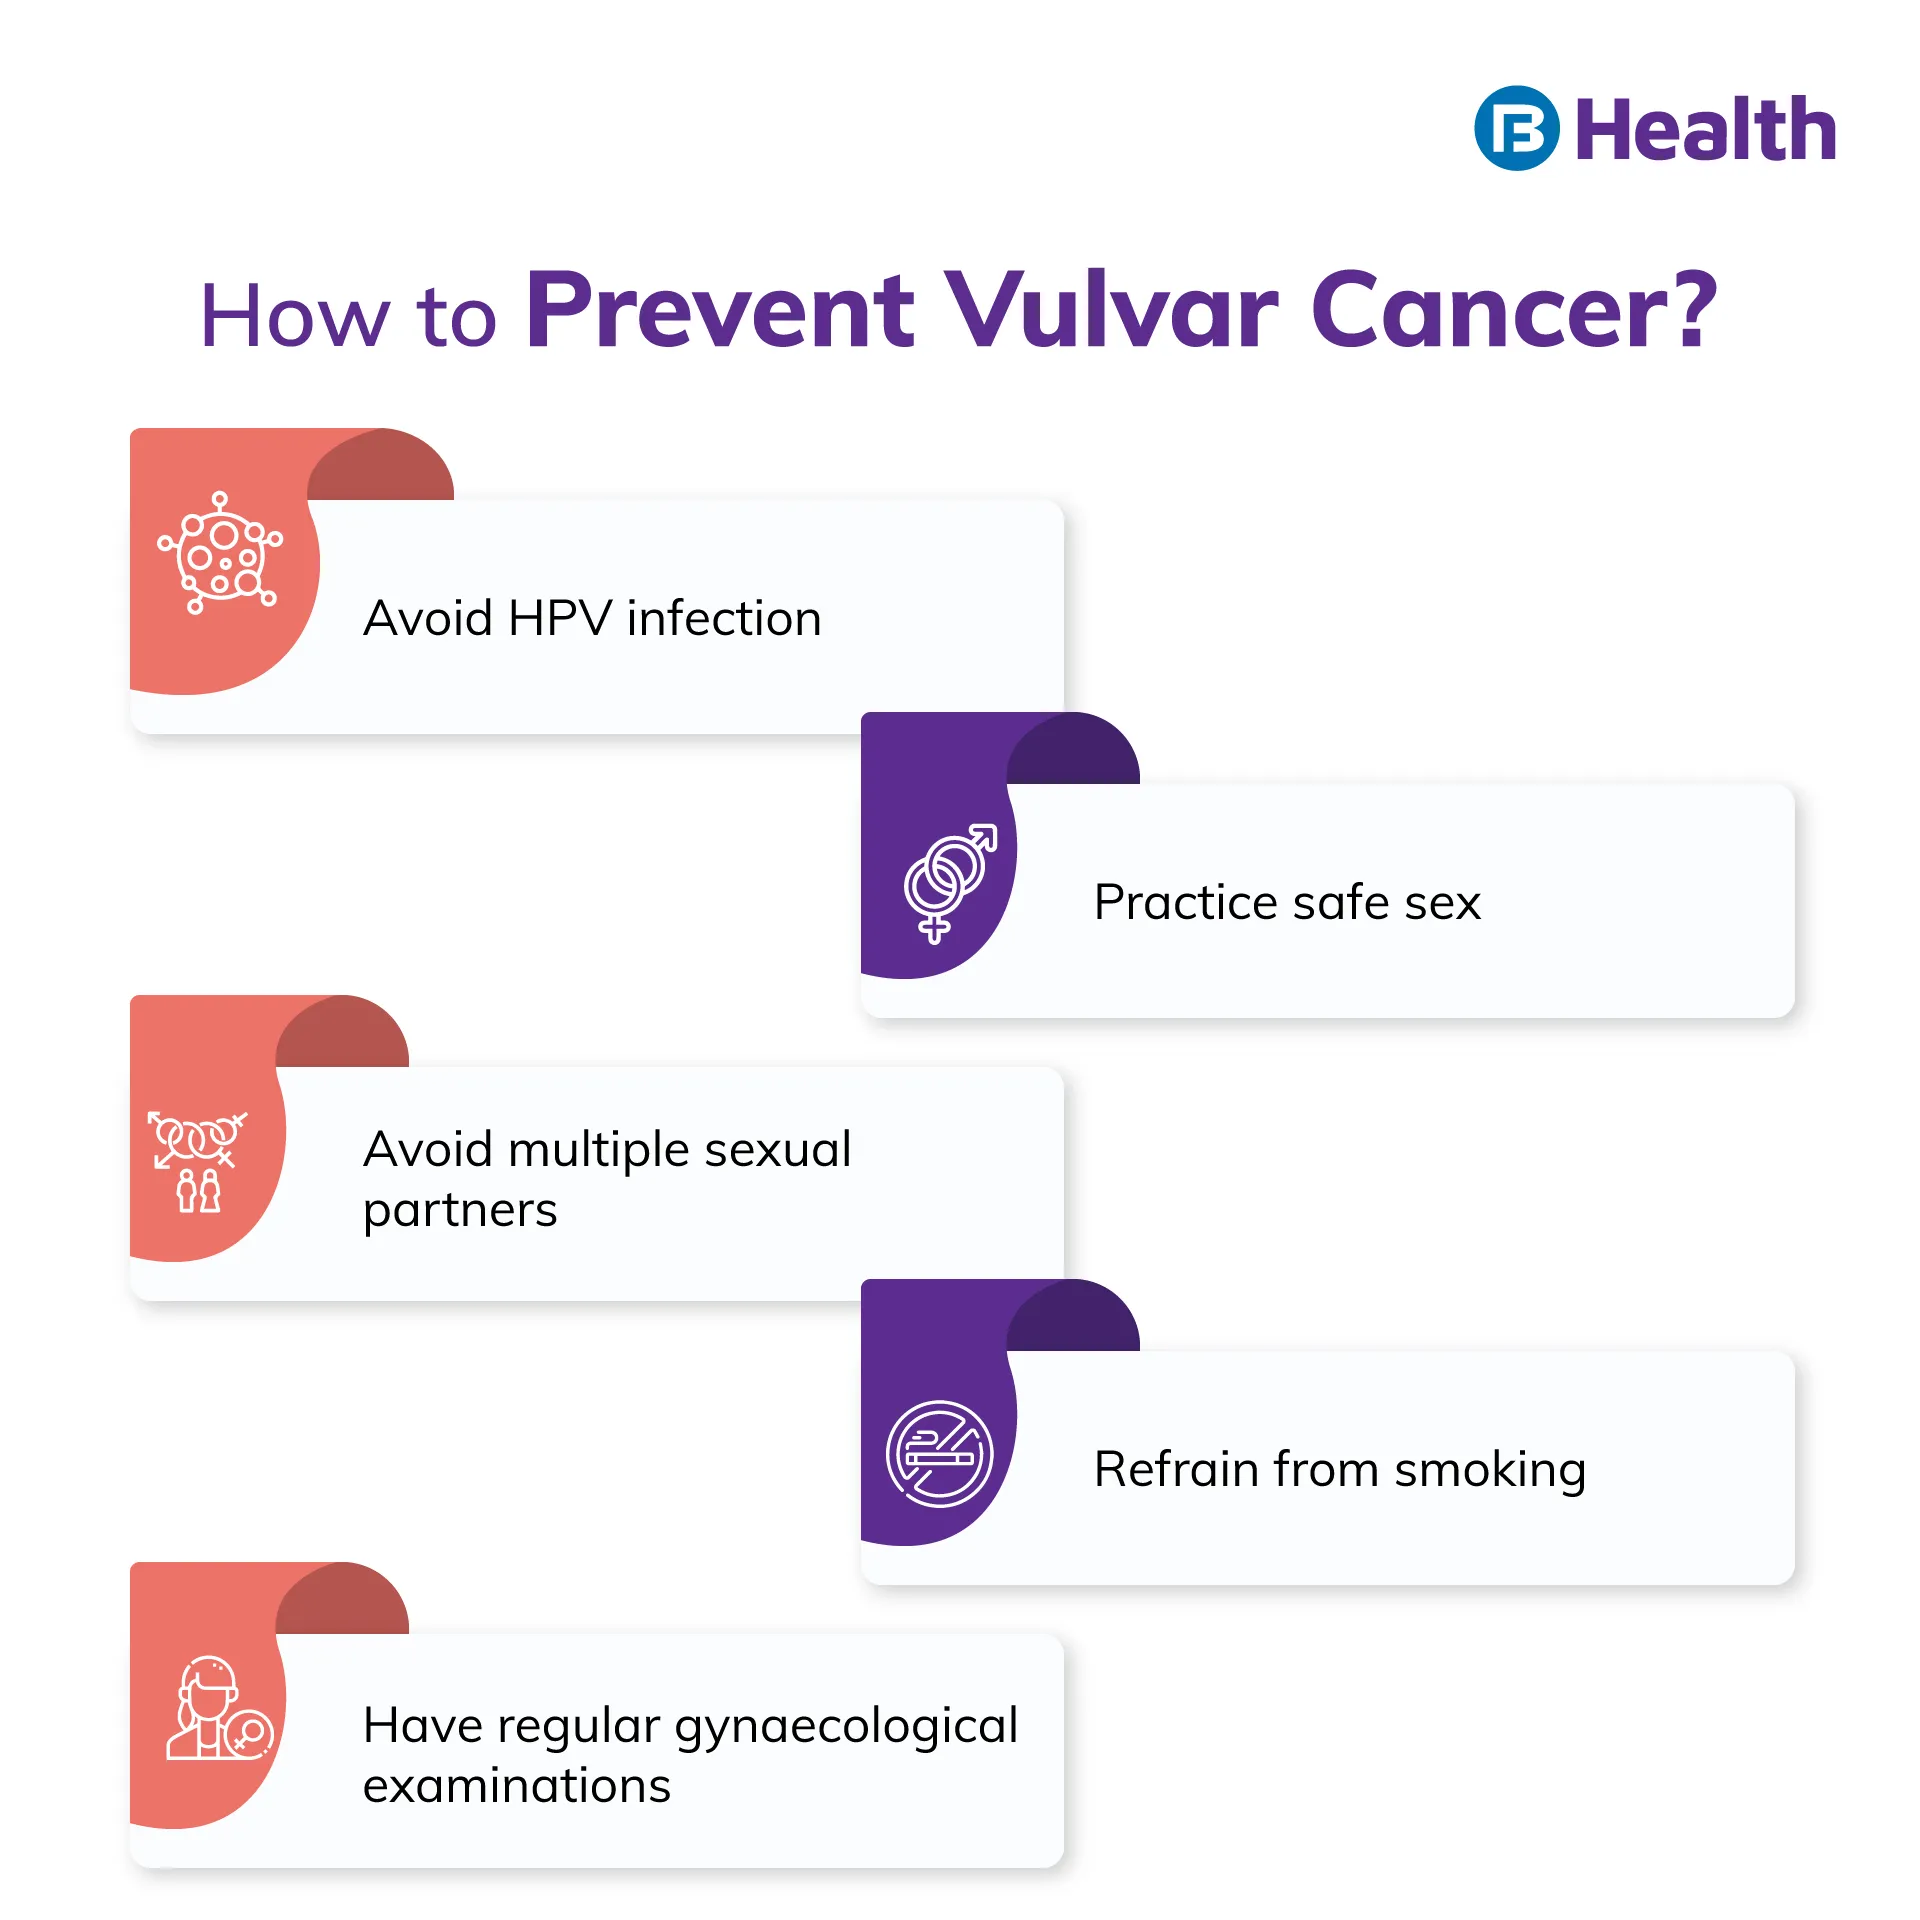 Prevention of Vulvar Cancer